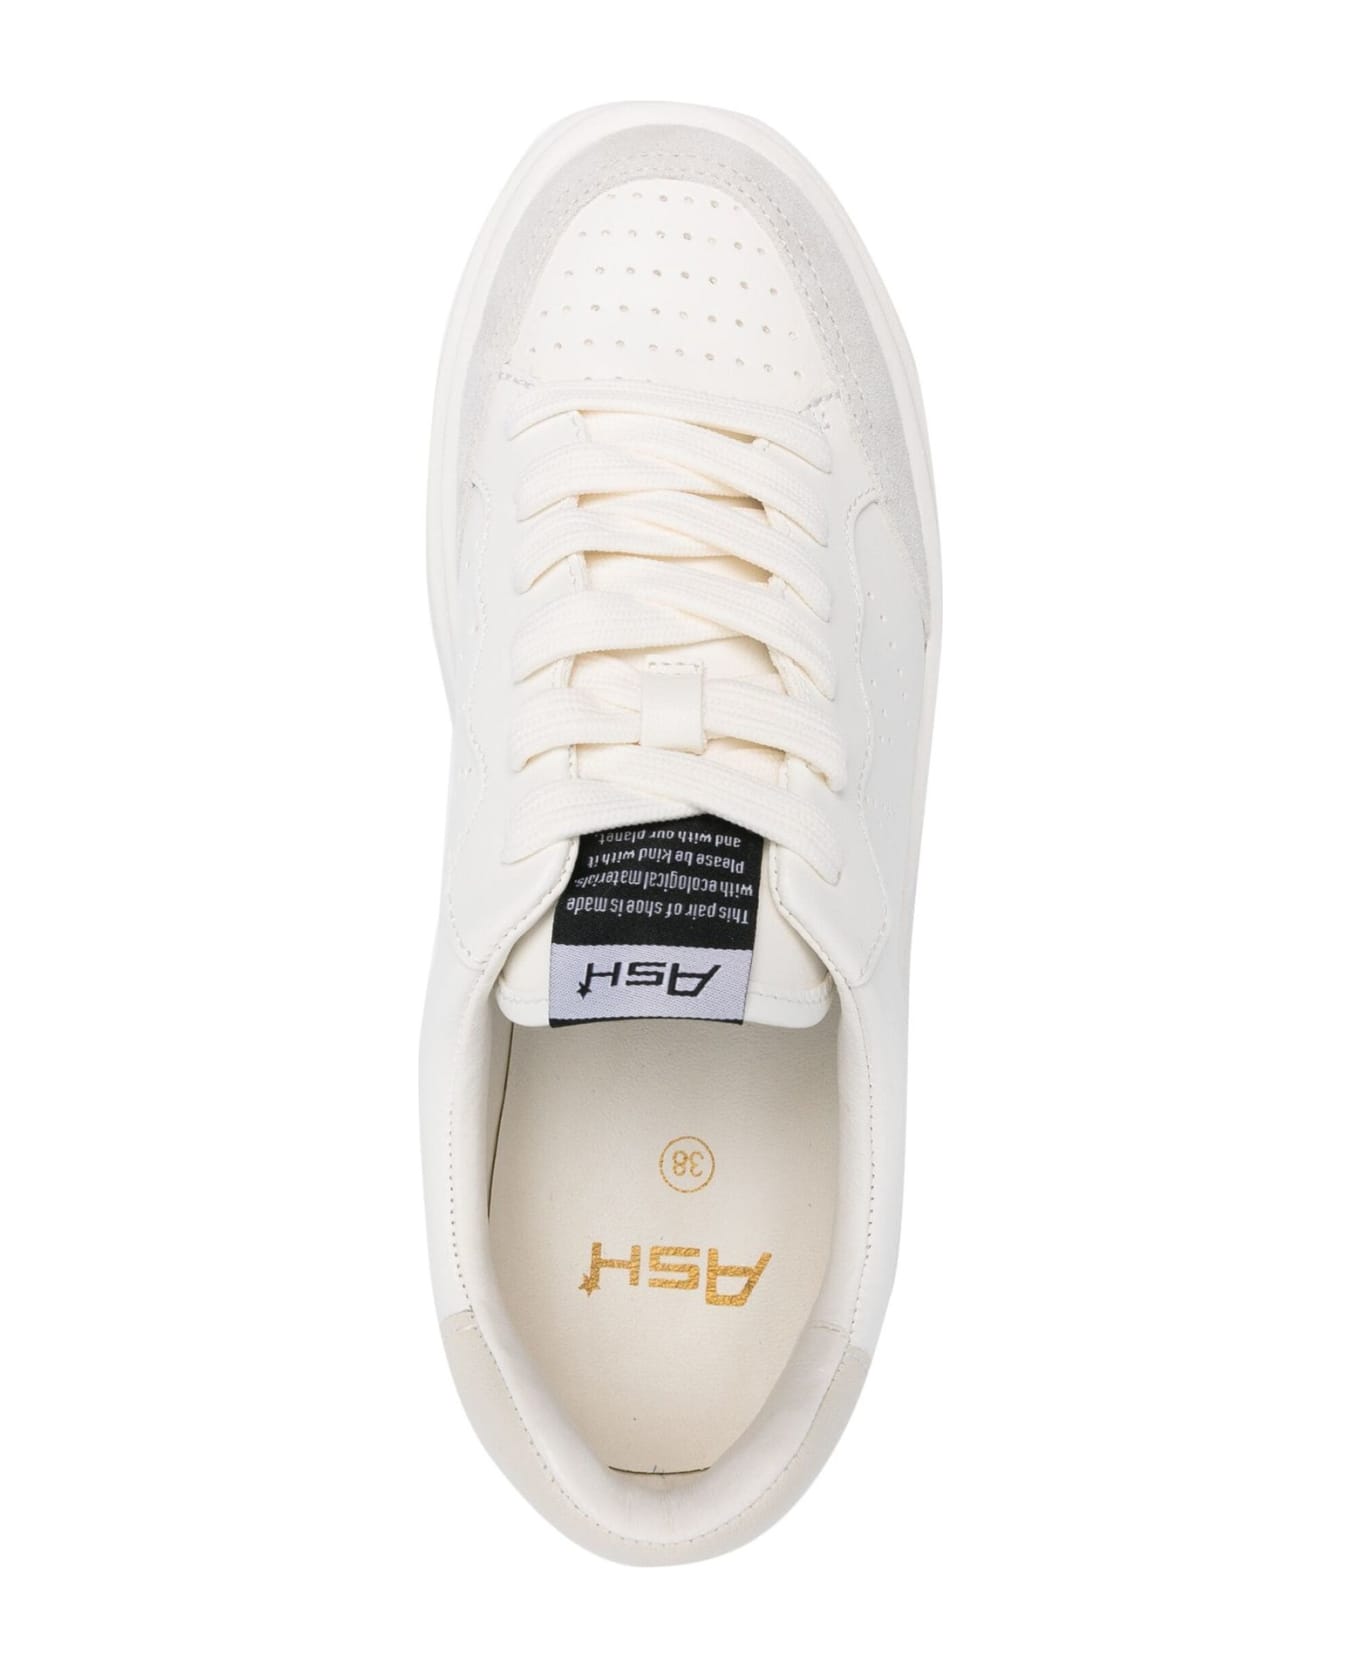 Ash White Calf Leather Sneakers - White talco white